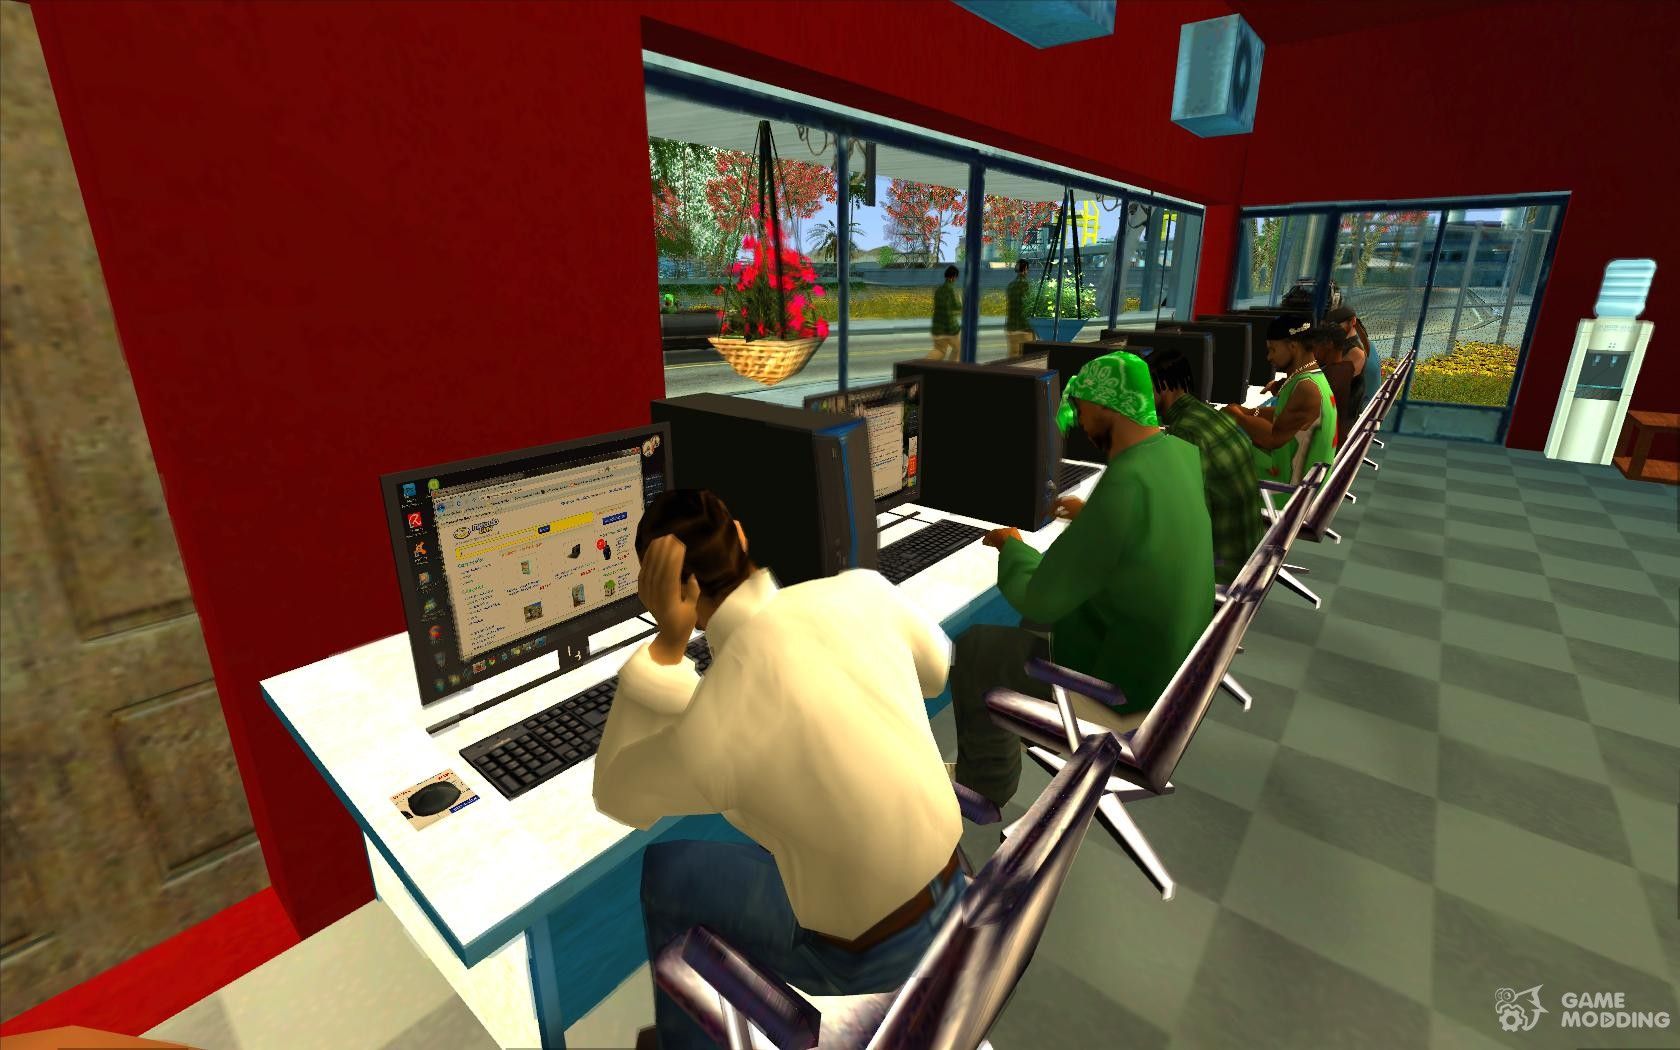 Ganton Cyber Cafe Mod v 1.0 for GTA San Andreas